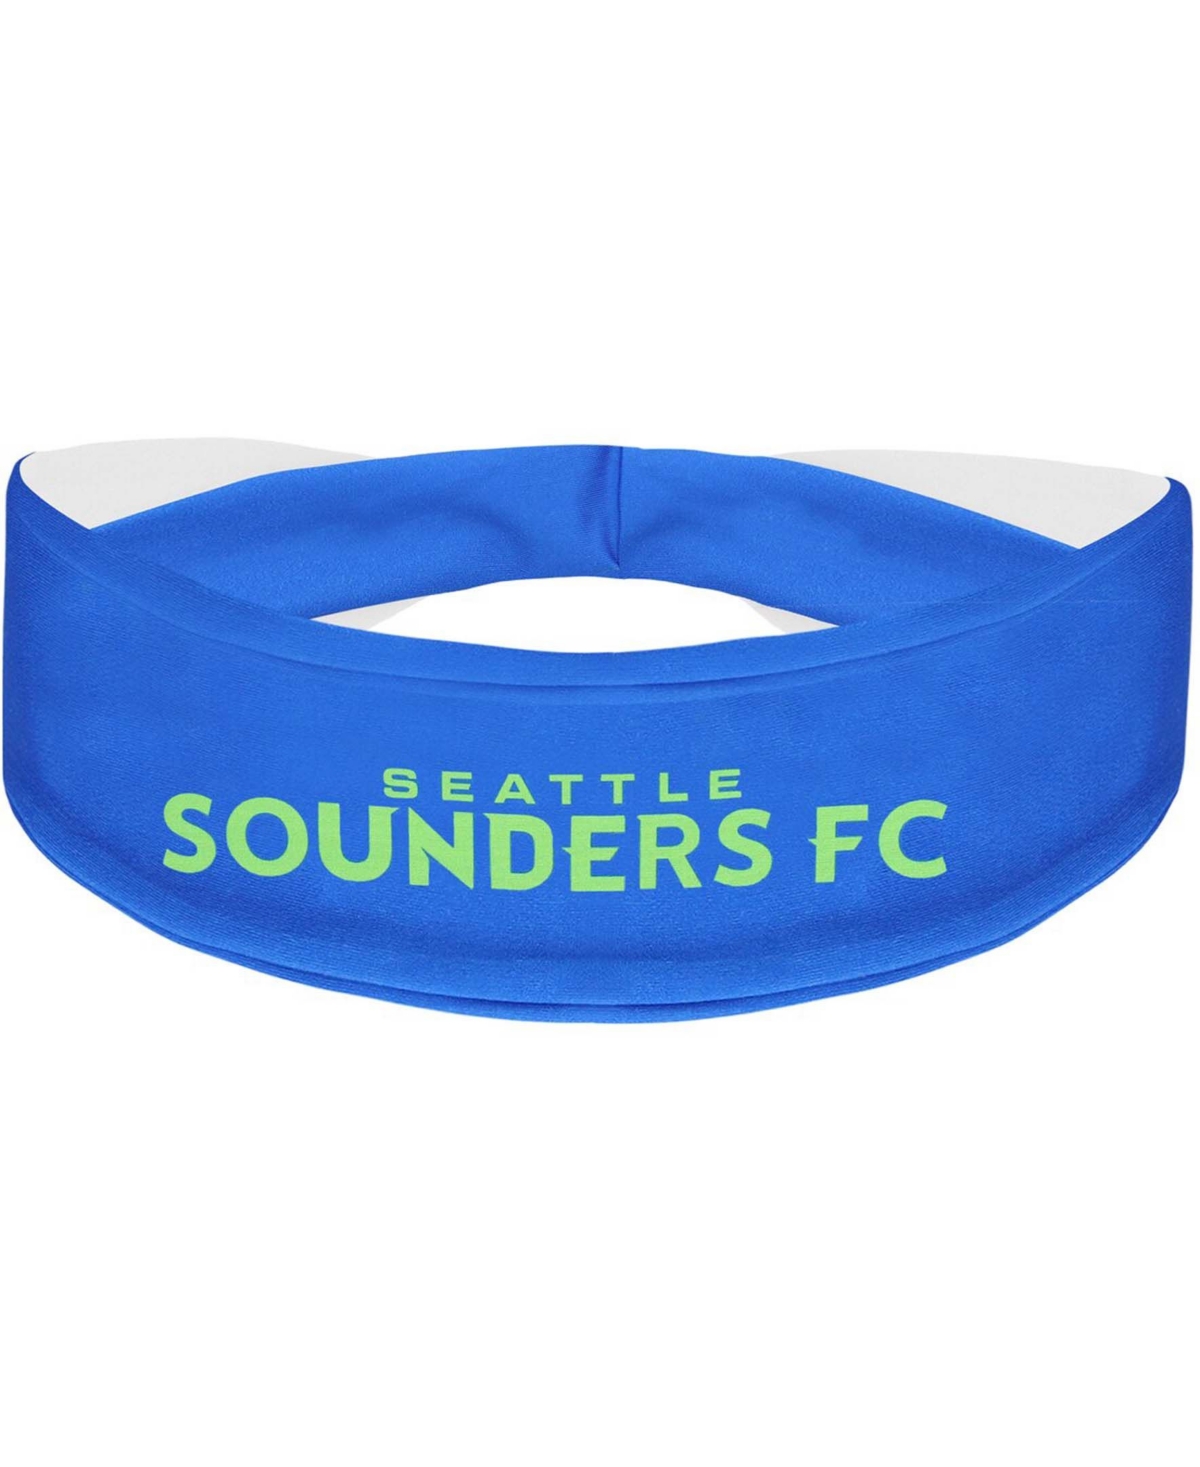 Blue Seattle Sounders Fc Alternate Logo Cooling Headband - Blue